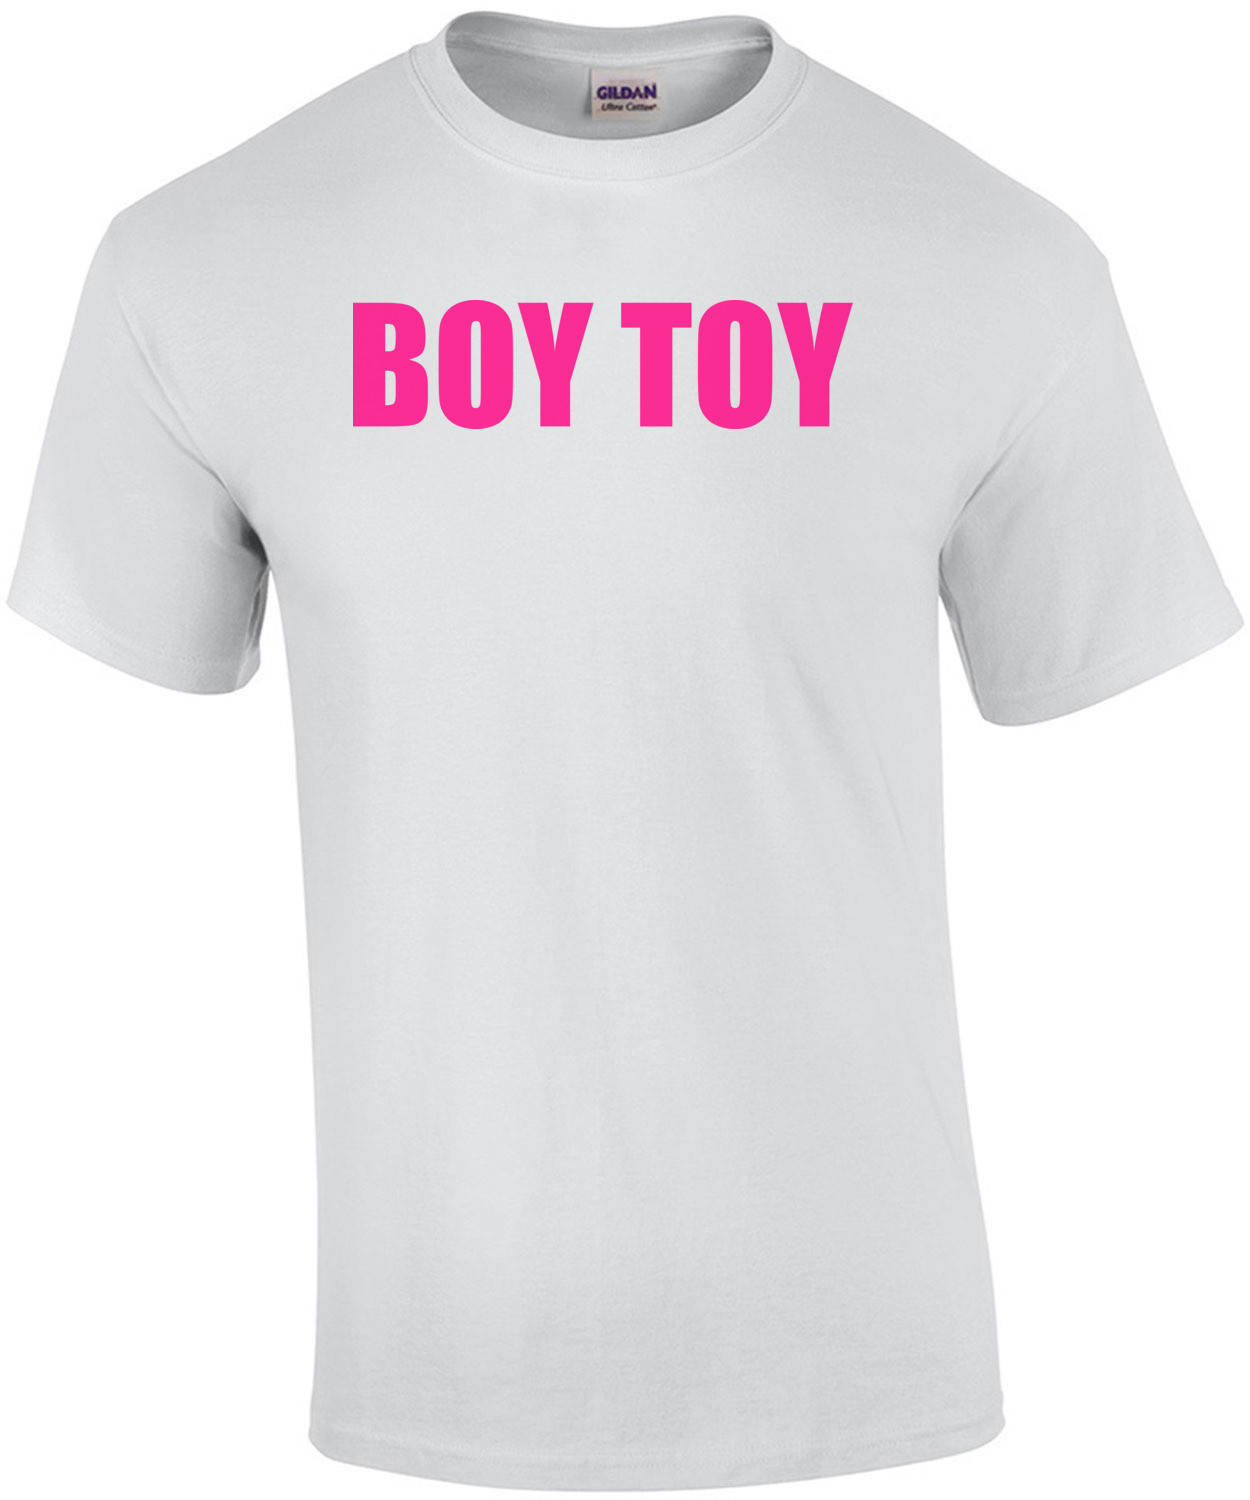 BOY TOY Shirt